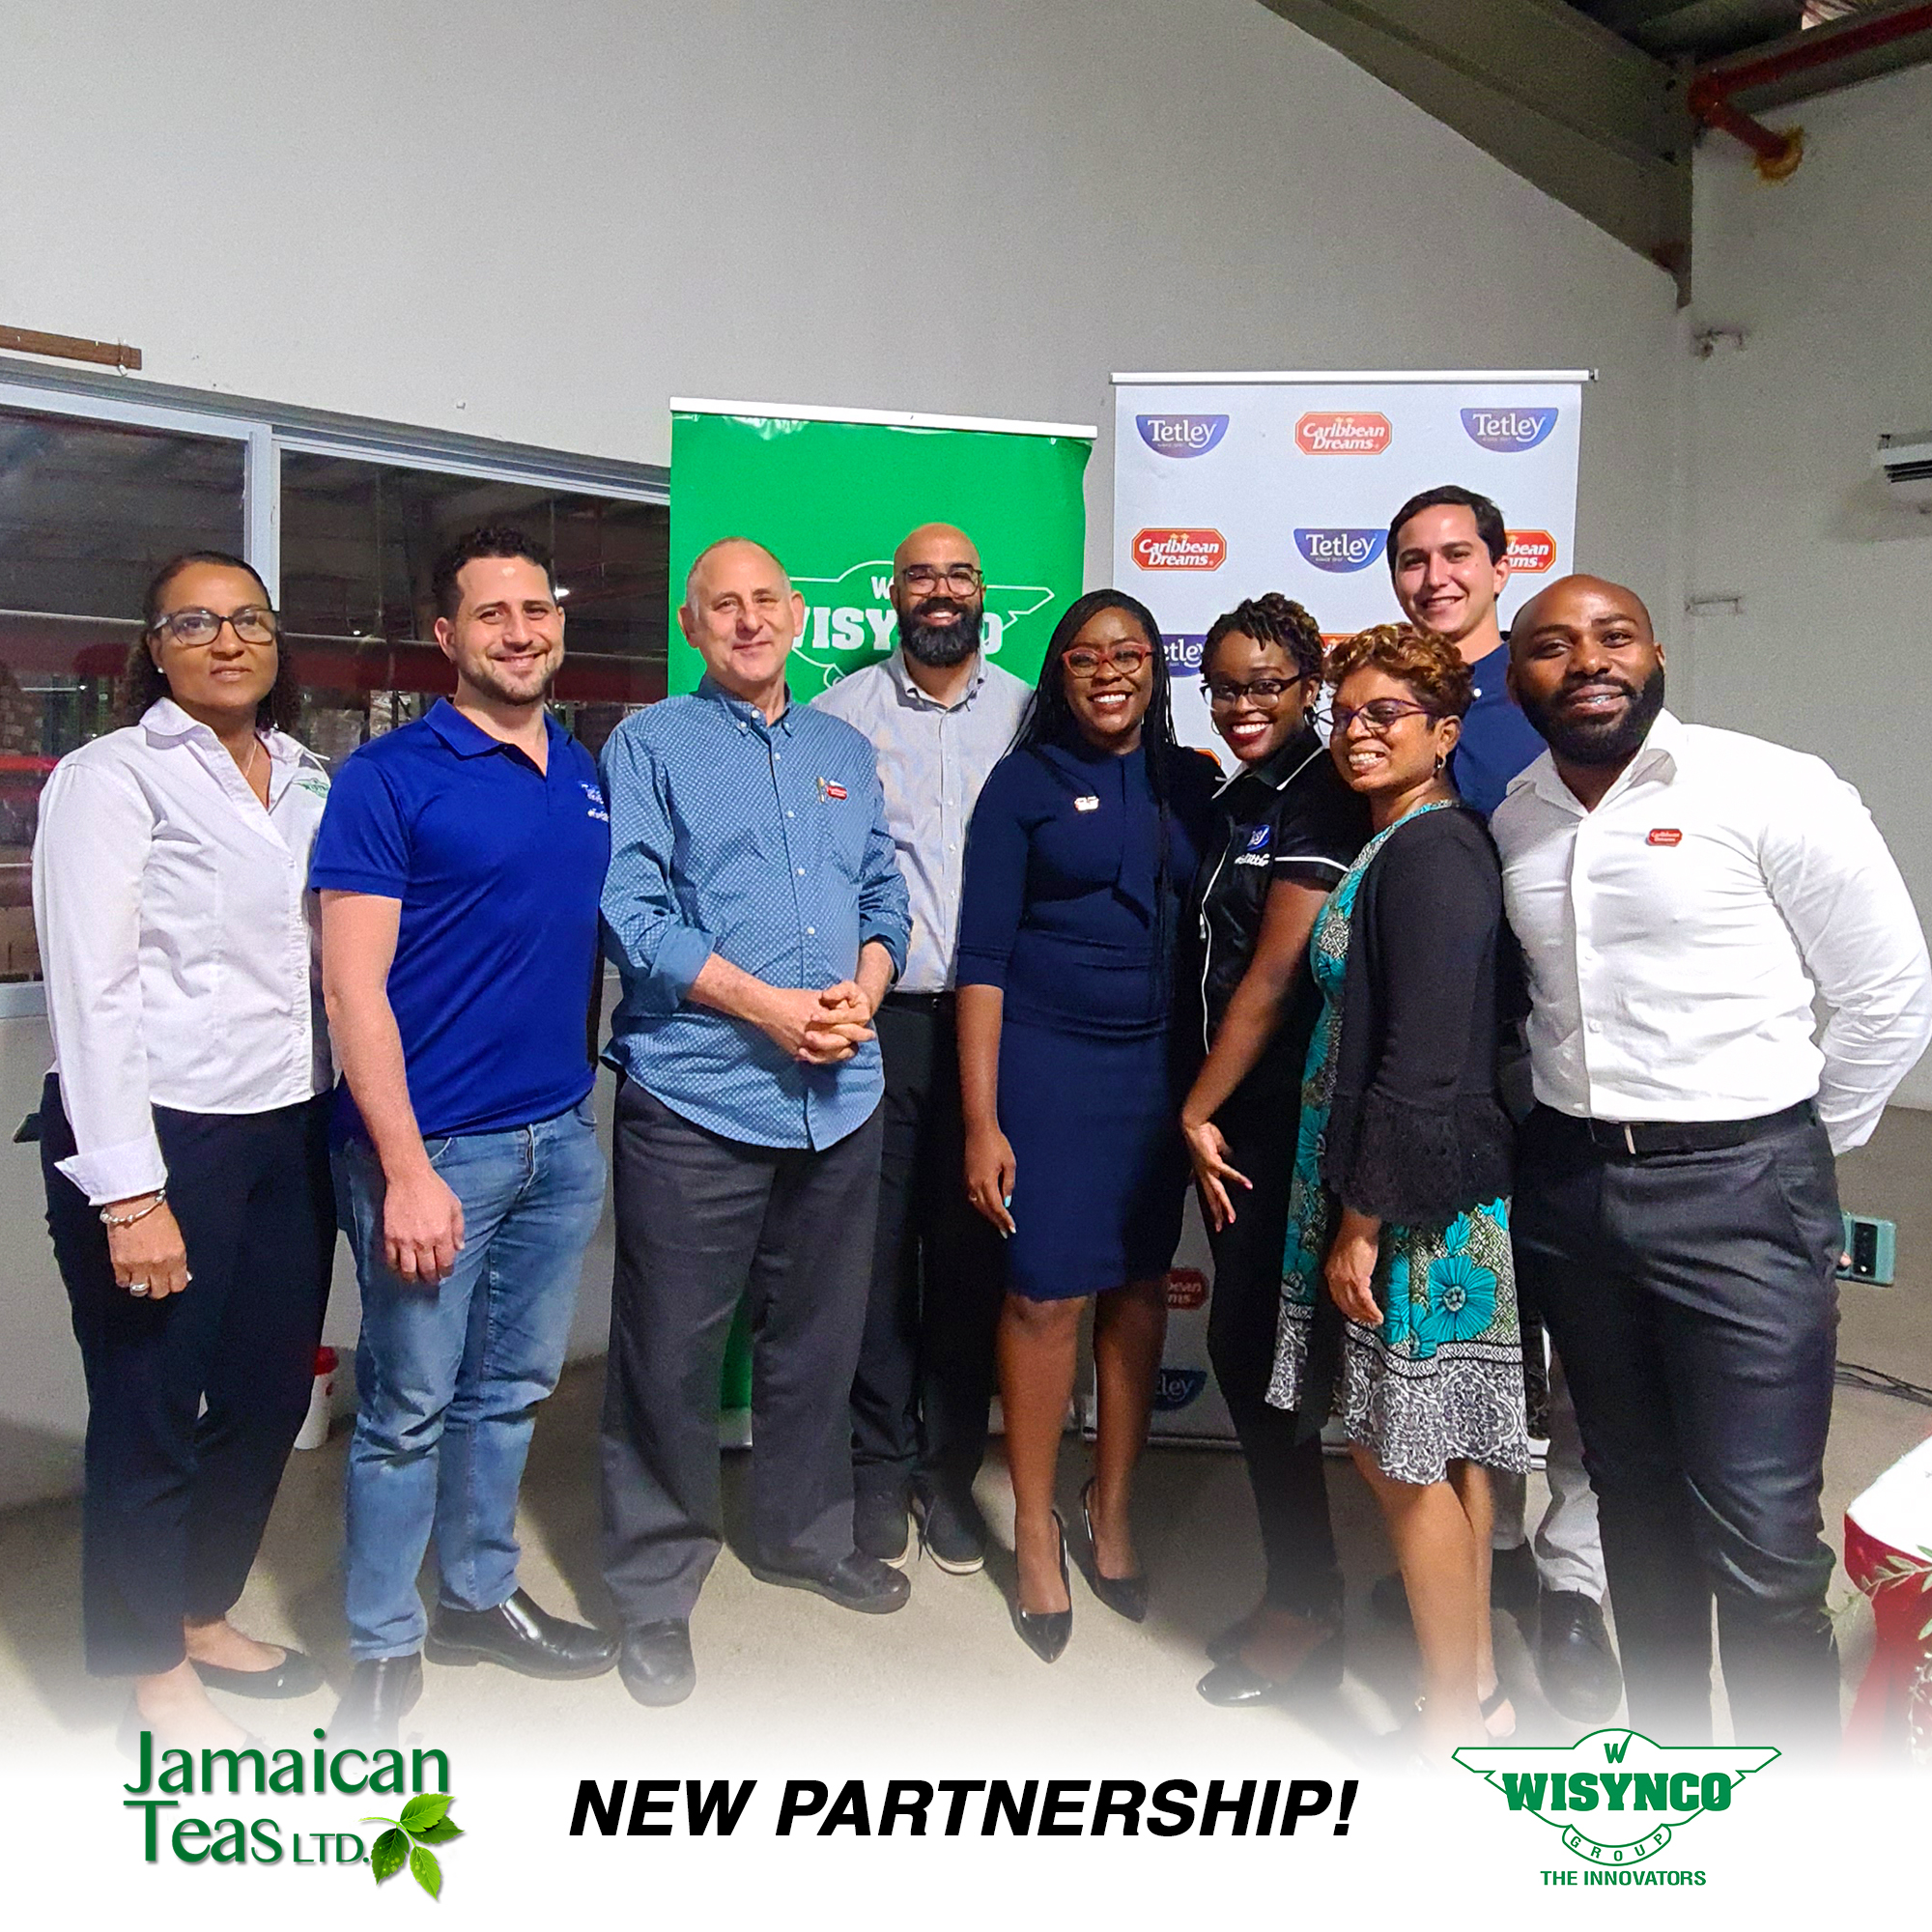 Jamaican Teas Ltd. and Wisynco's New Partnership